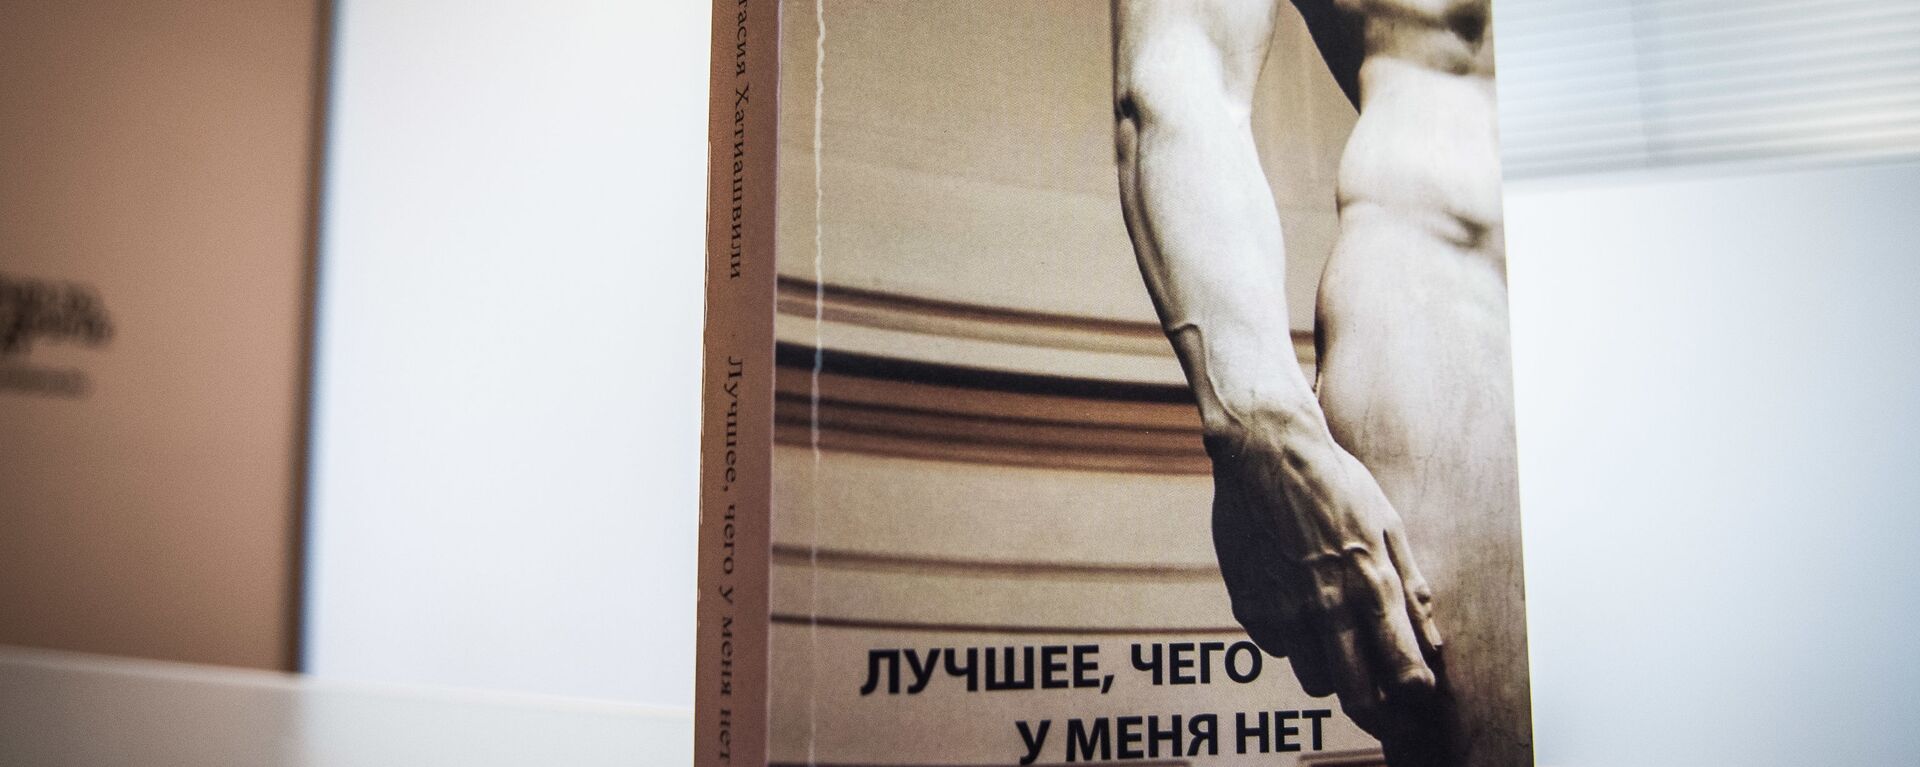 Книга Анастасии Хатиашвили - Sputnik Грузия, 1920, 19.05.2021